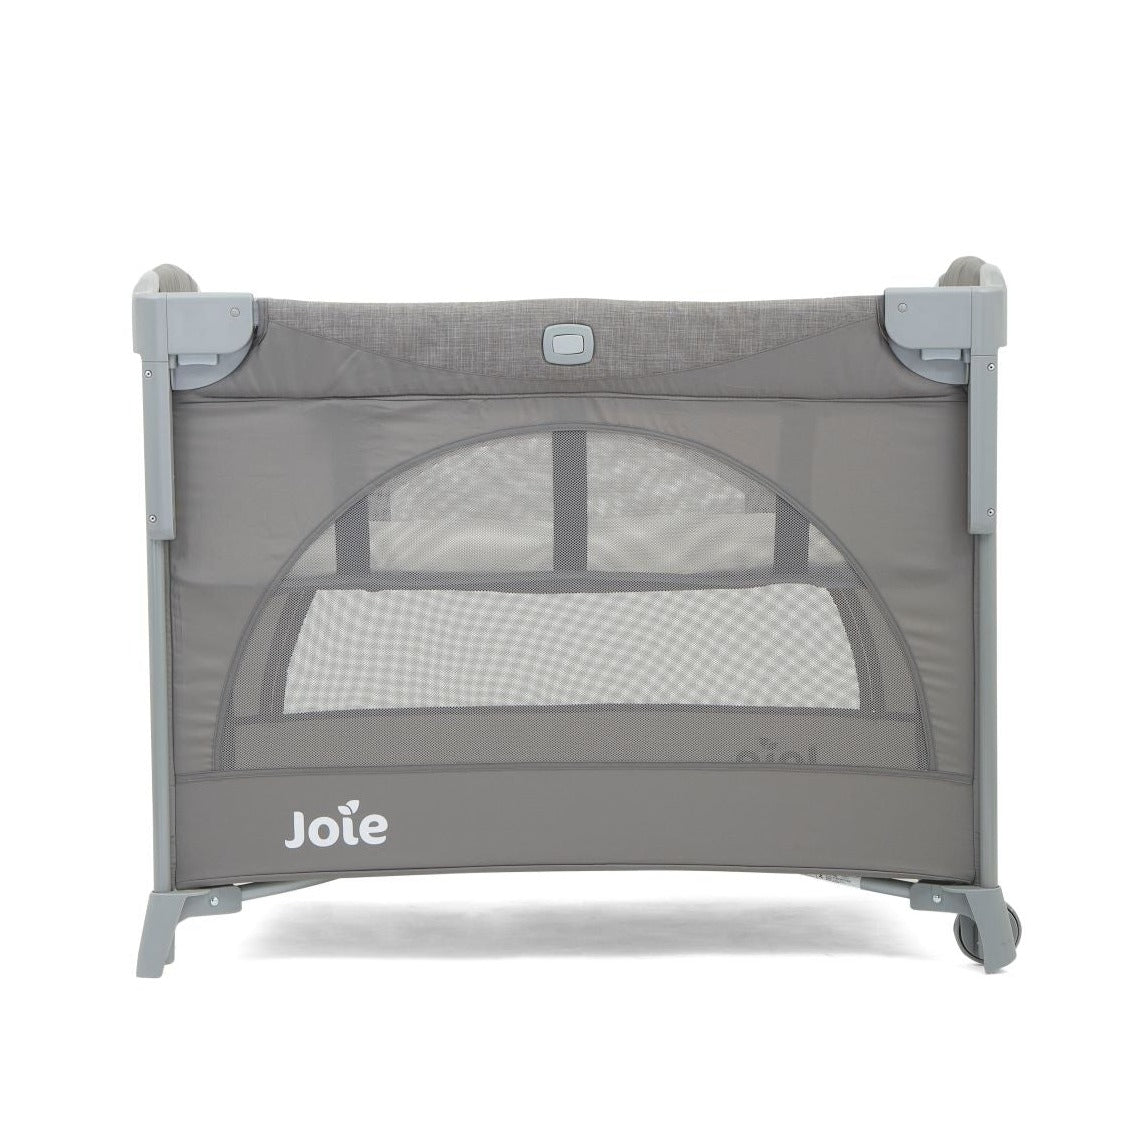 Joie Kubbie Sleep Foggy Gray - P1807EAFGY000